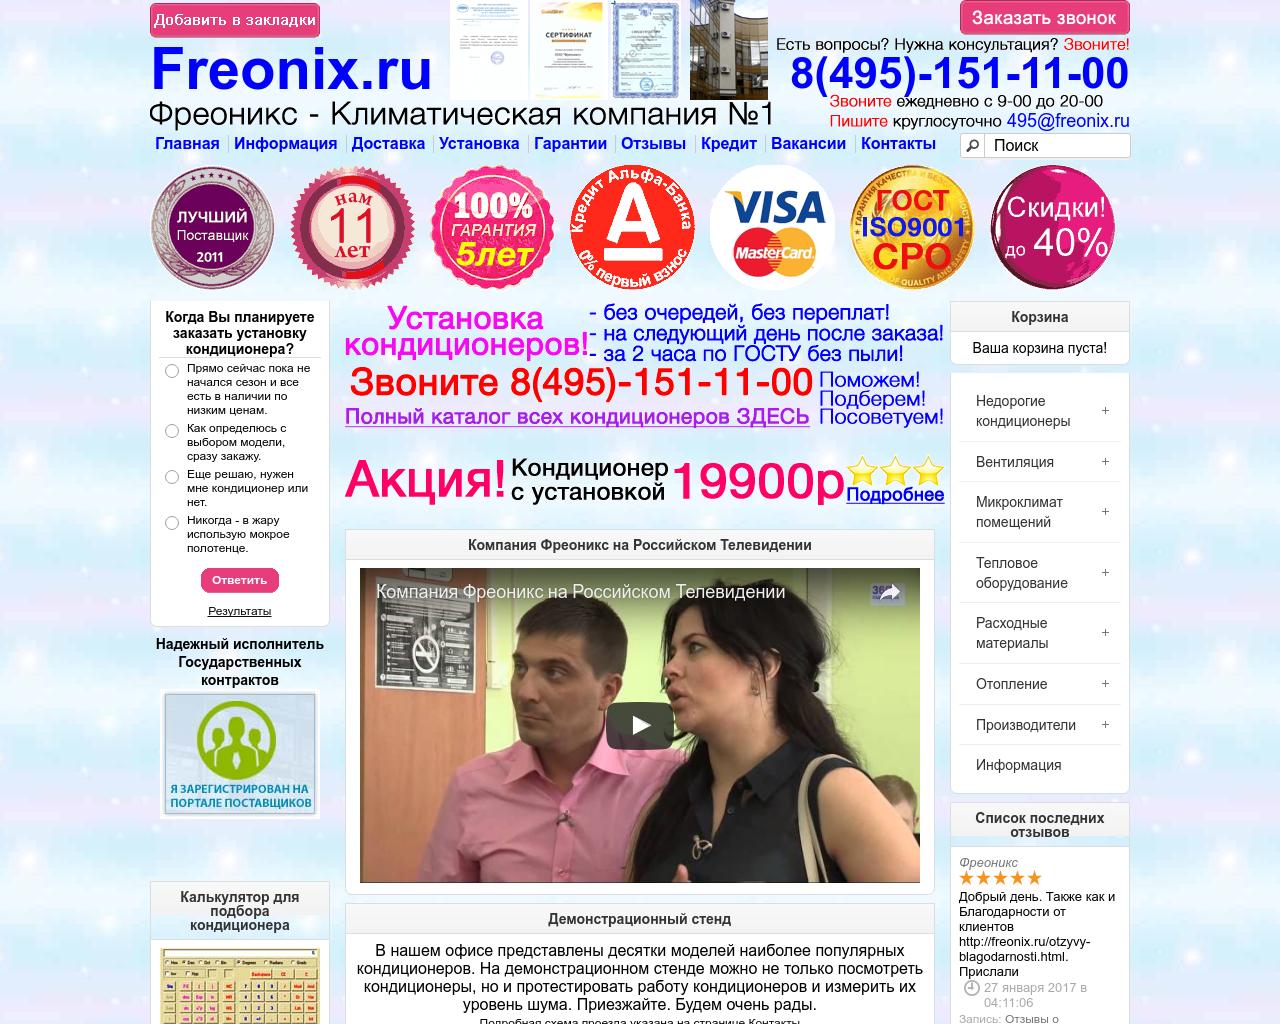 Изображение сайта freonix.ru в разрешении 1280x1024